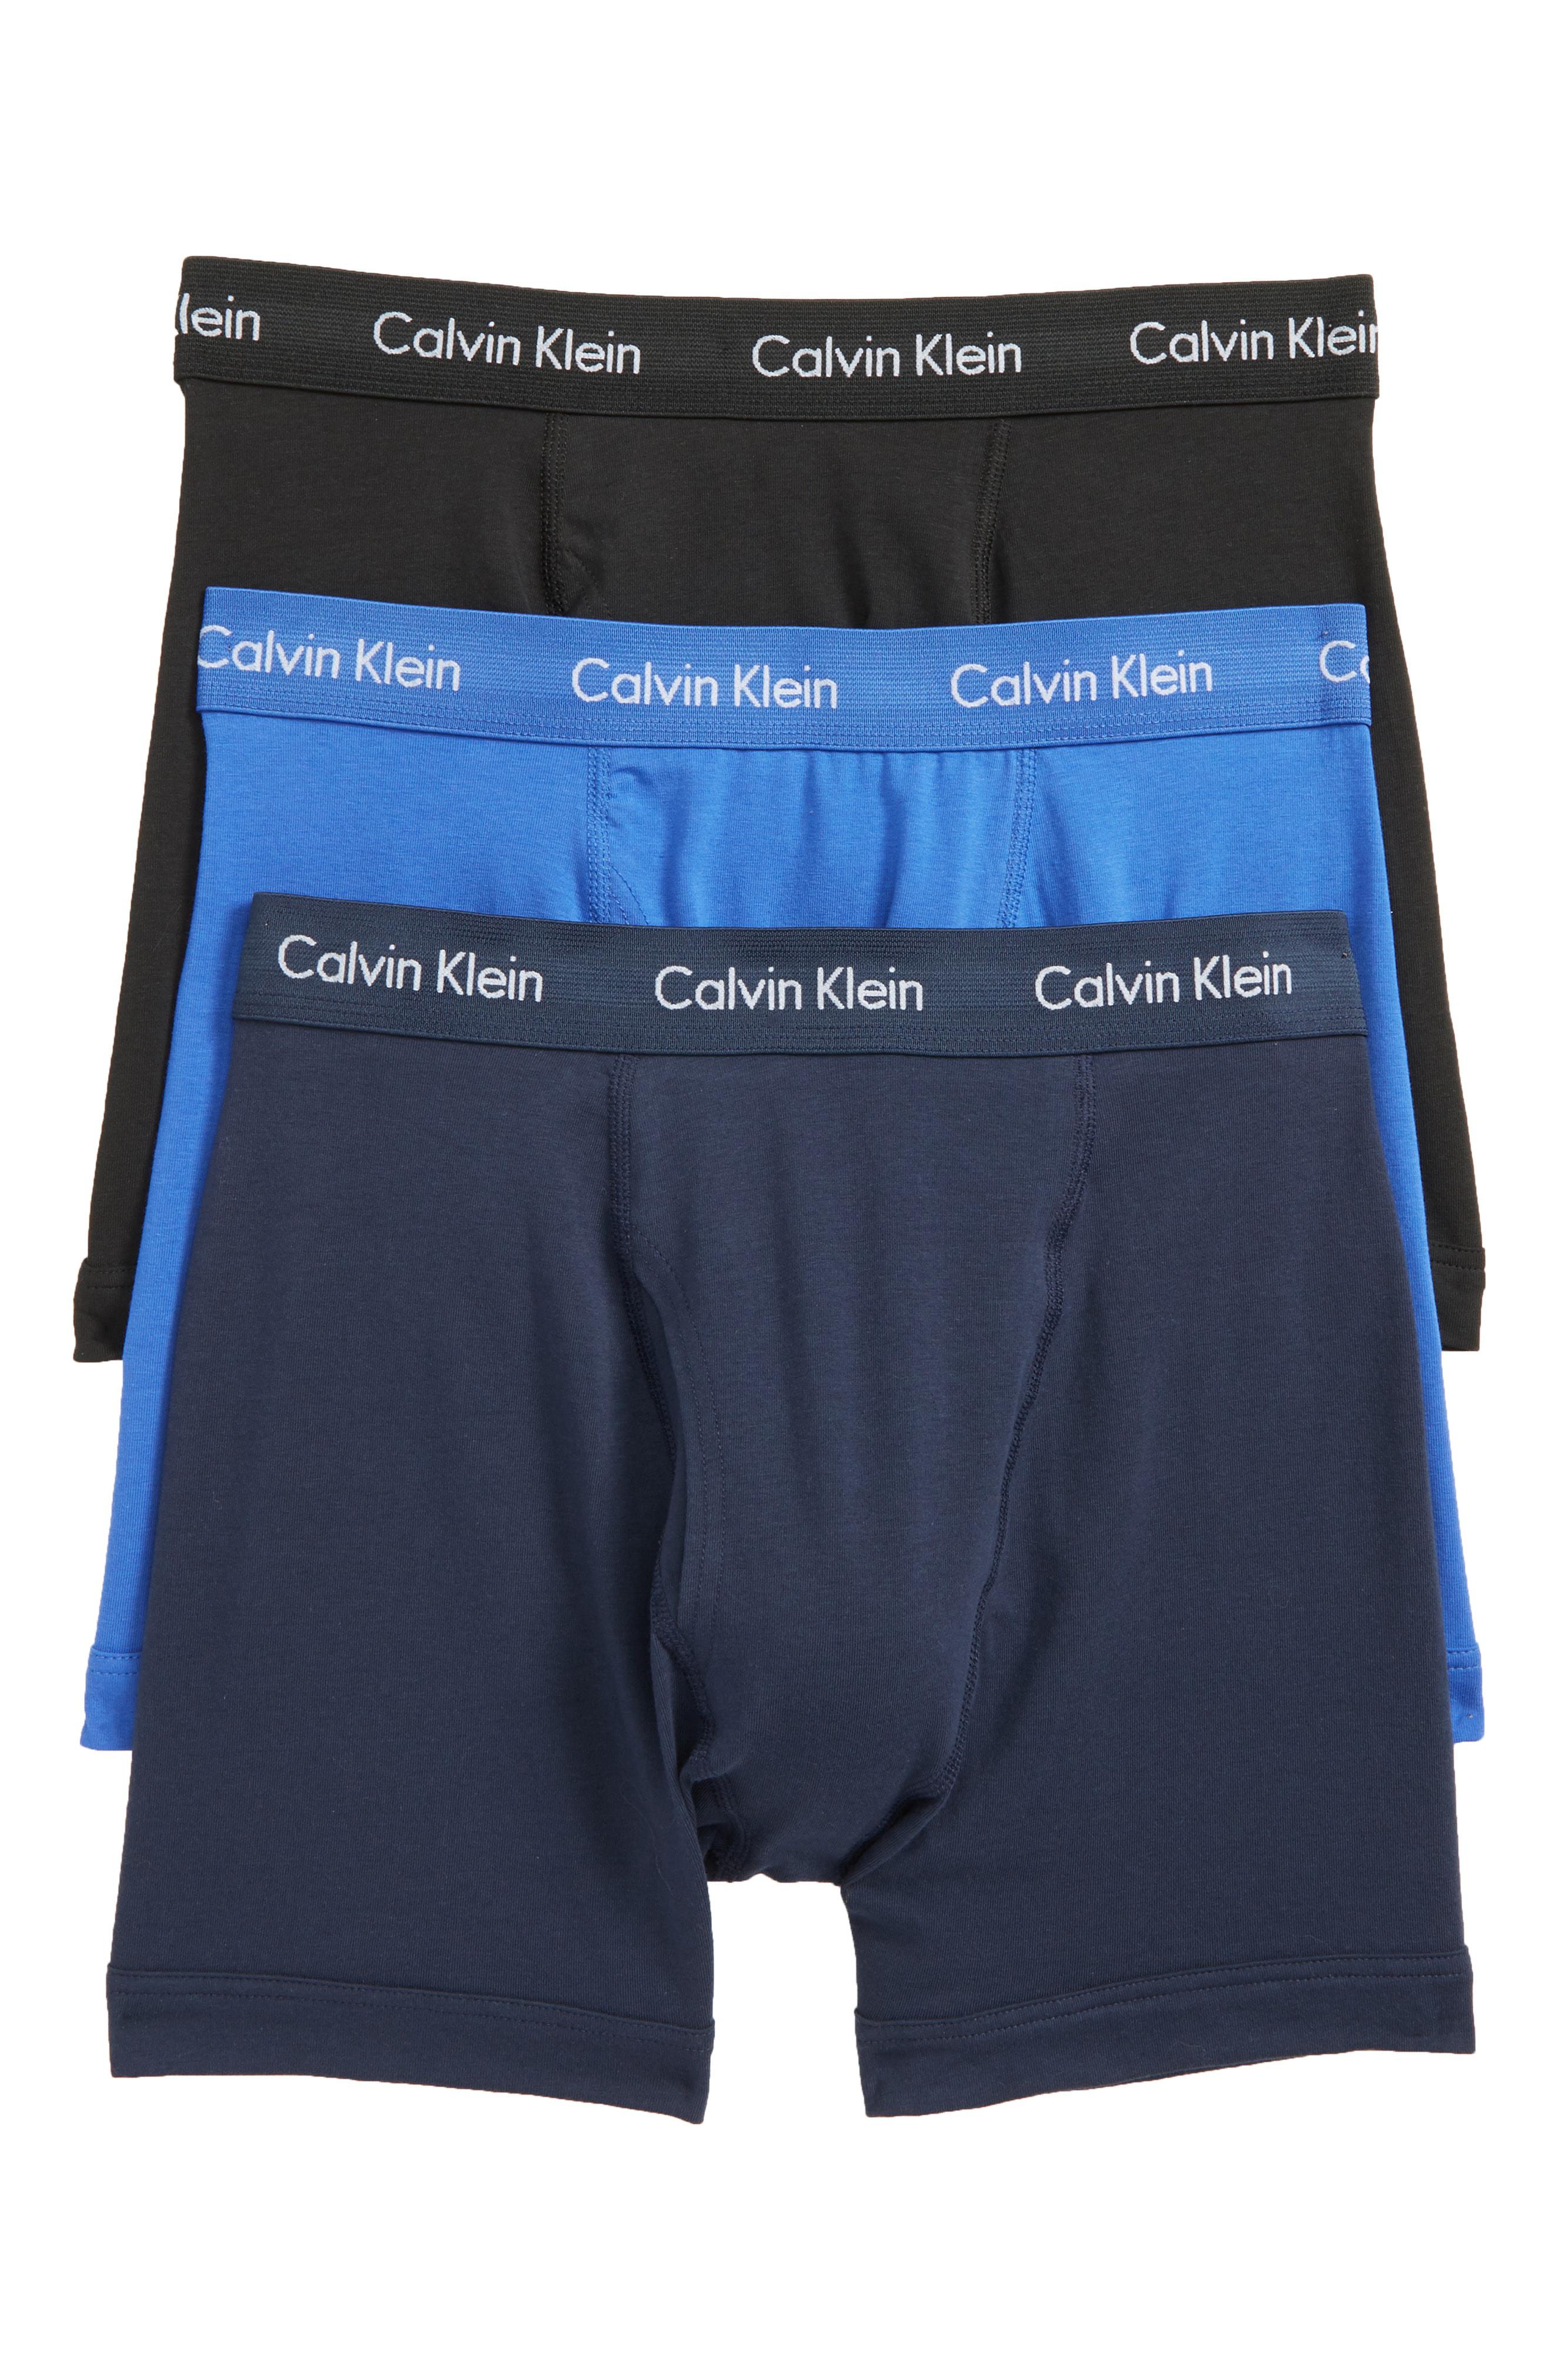 Lyst - Calvin Klein 3-pack Boxer Briefs, Blue in Blue for Men